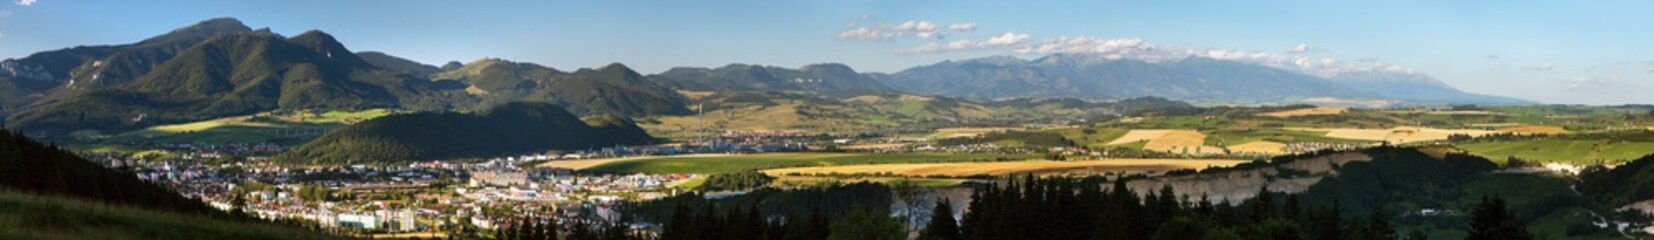 Ruzomberok town and carpathian mountains panoramic view